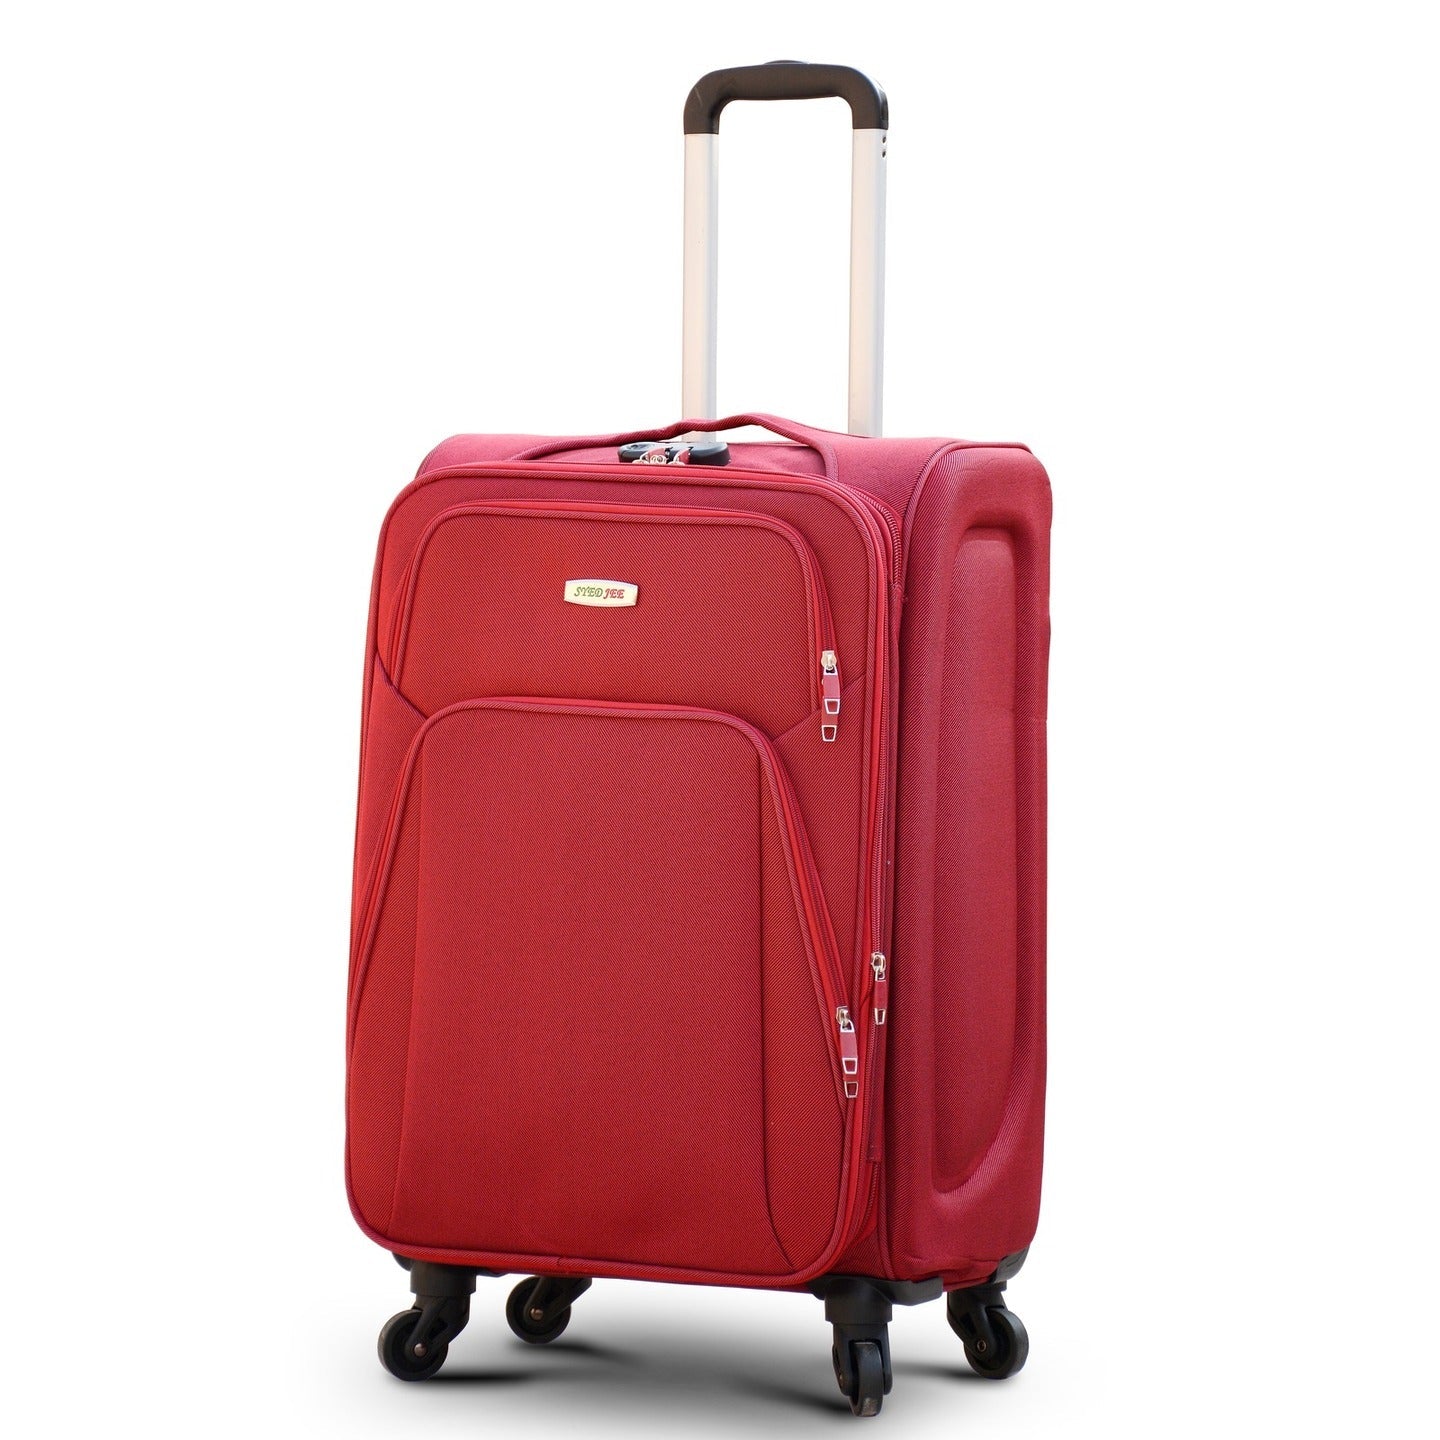 24" Red Colour SJ JIAN 4 Wheel Luggage Lightweight Soft Material Trolley Bag Zaappy.com